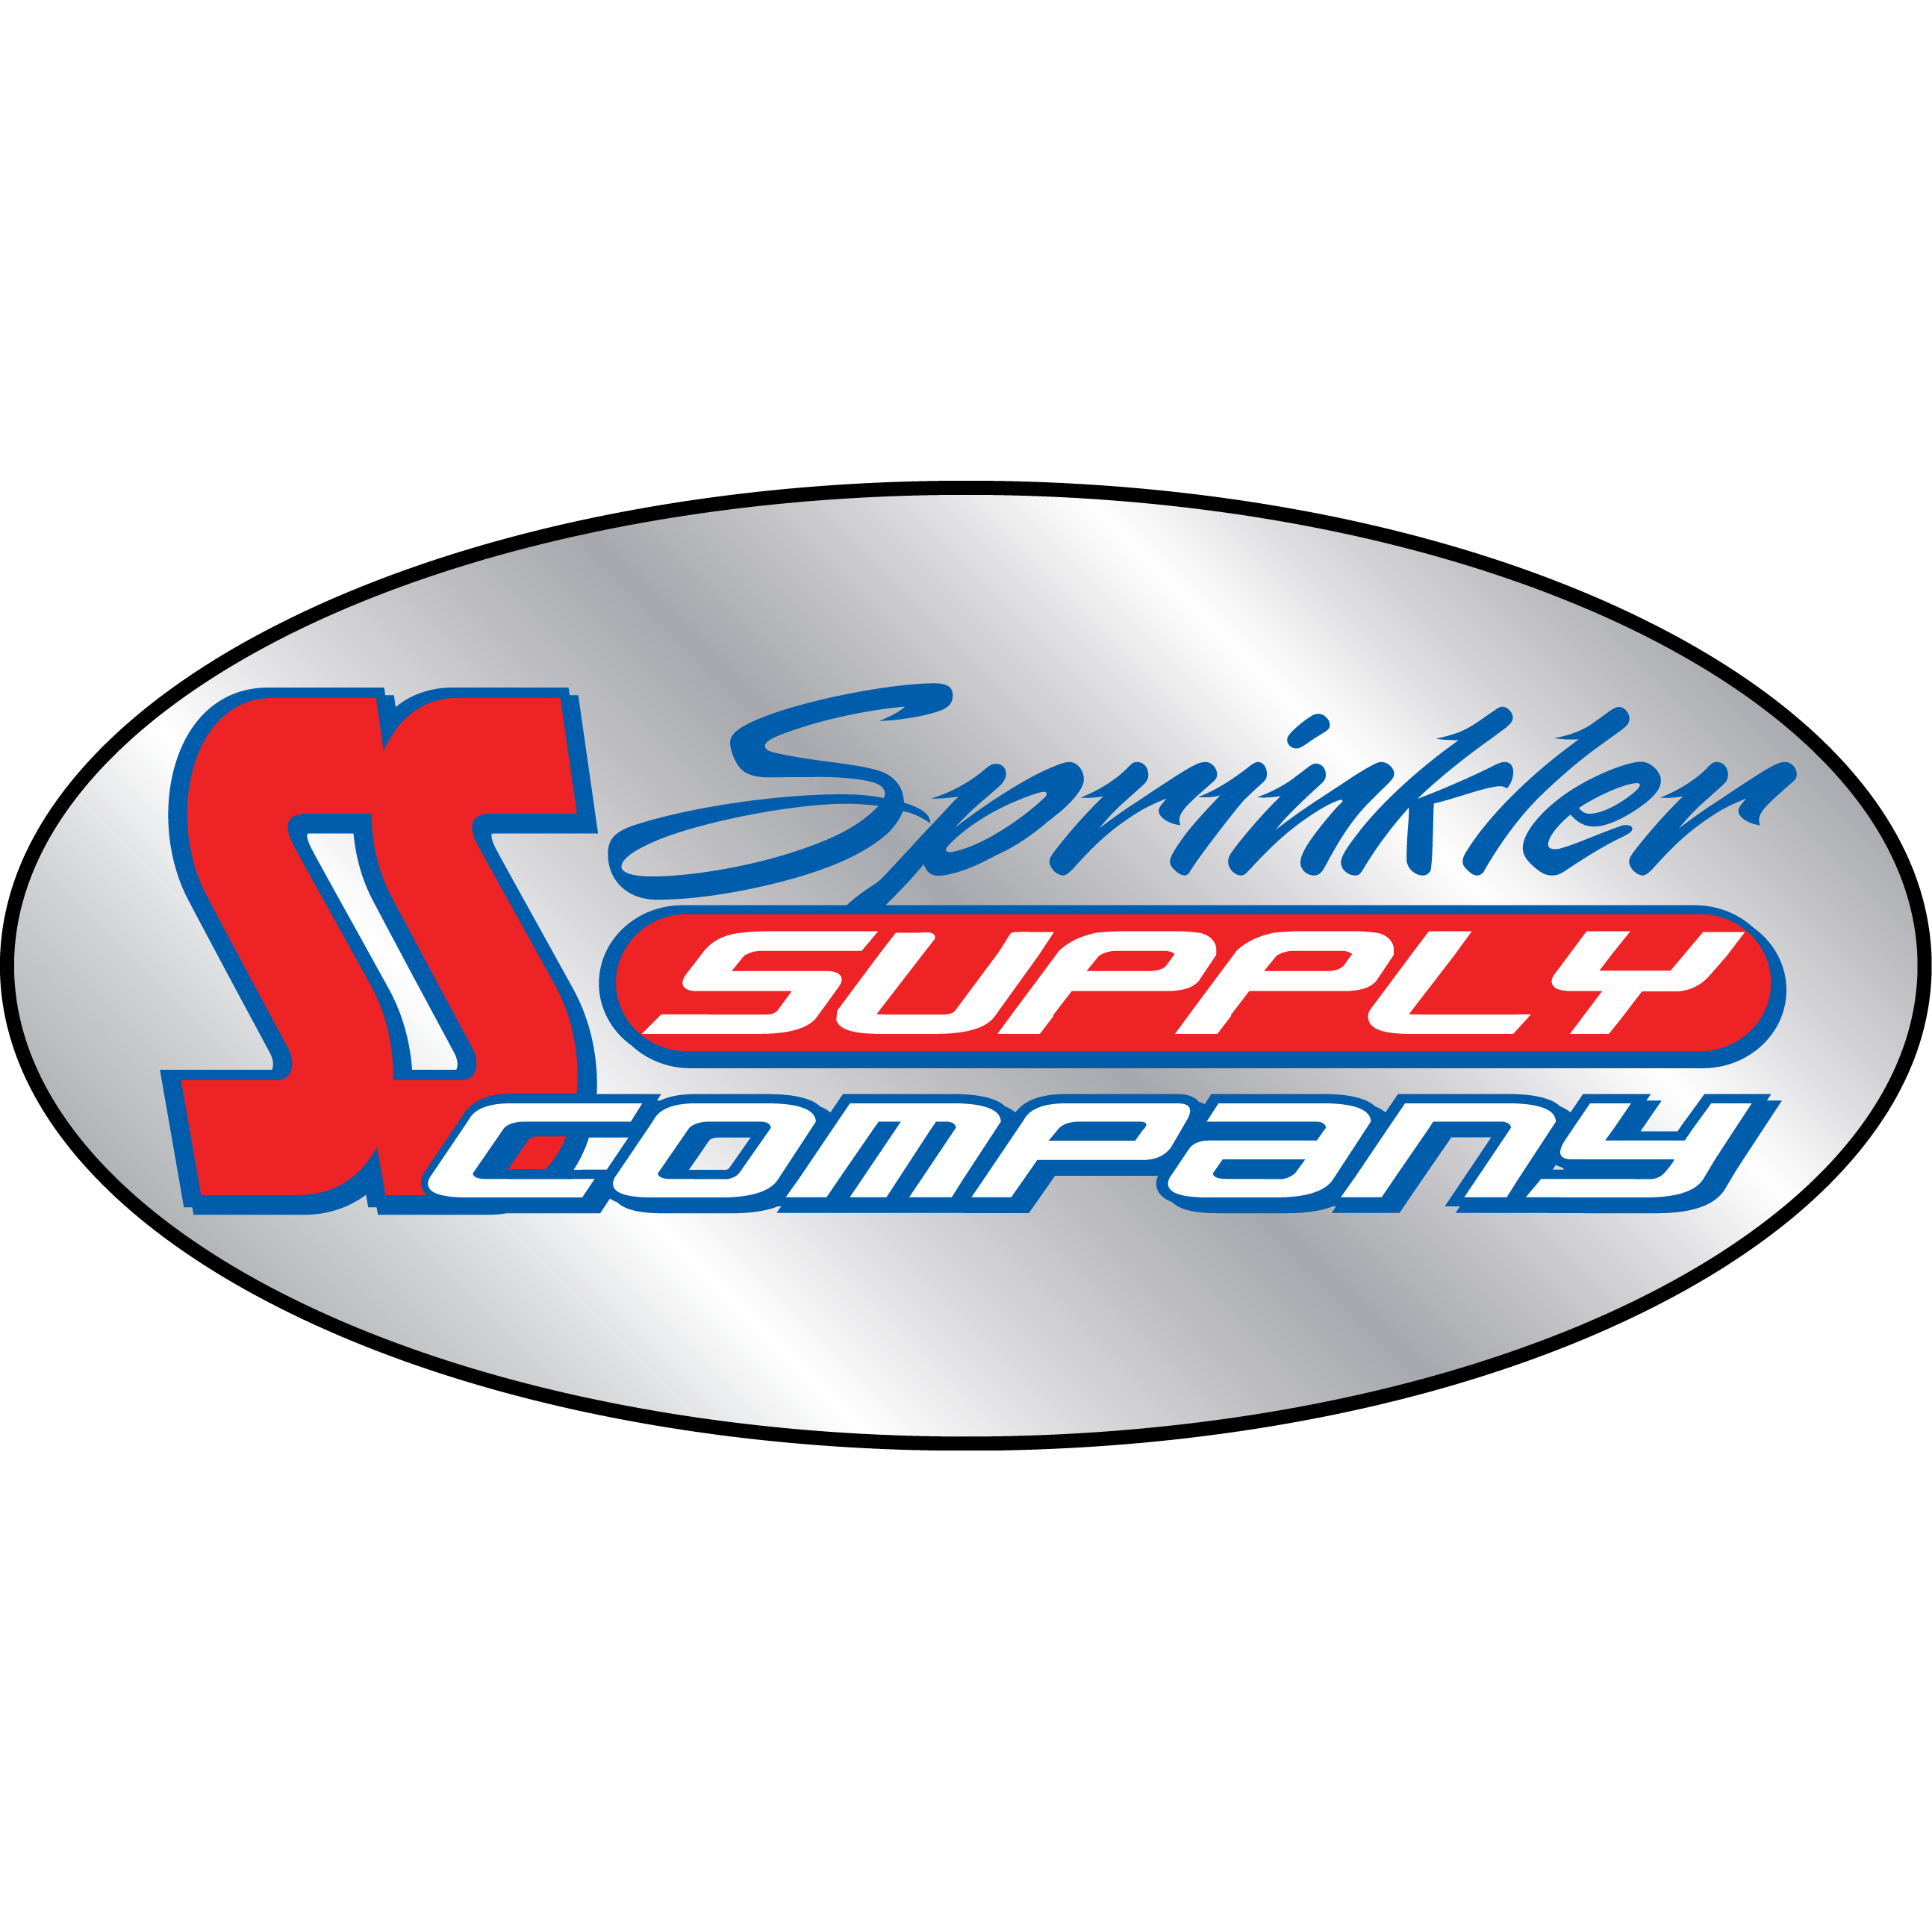 Sprinkler Supply Company Photo